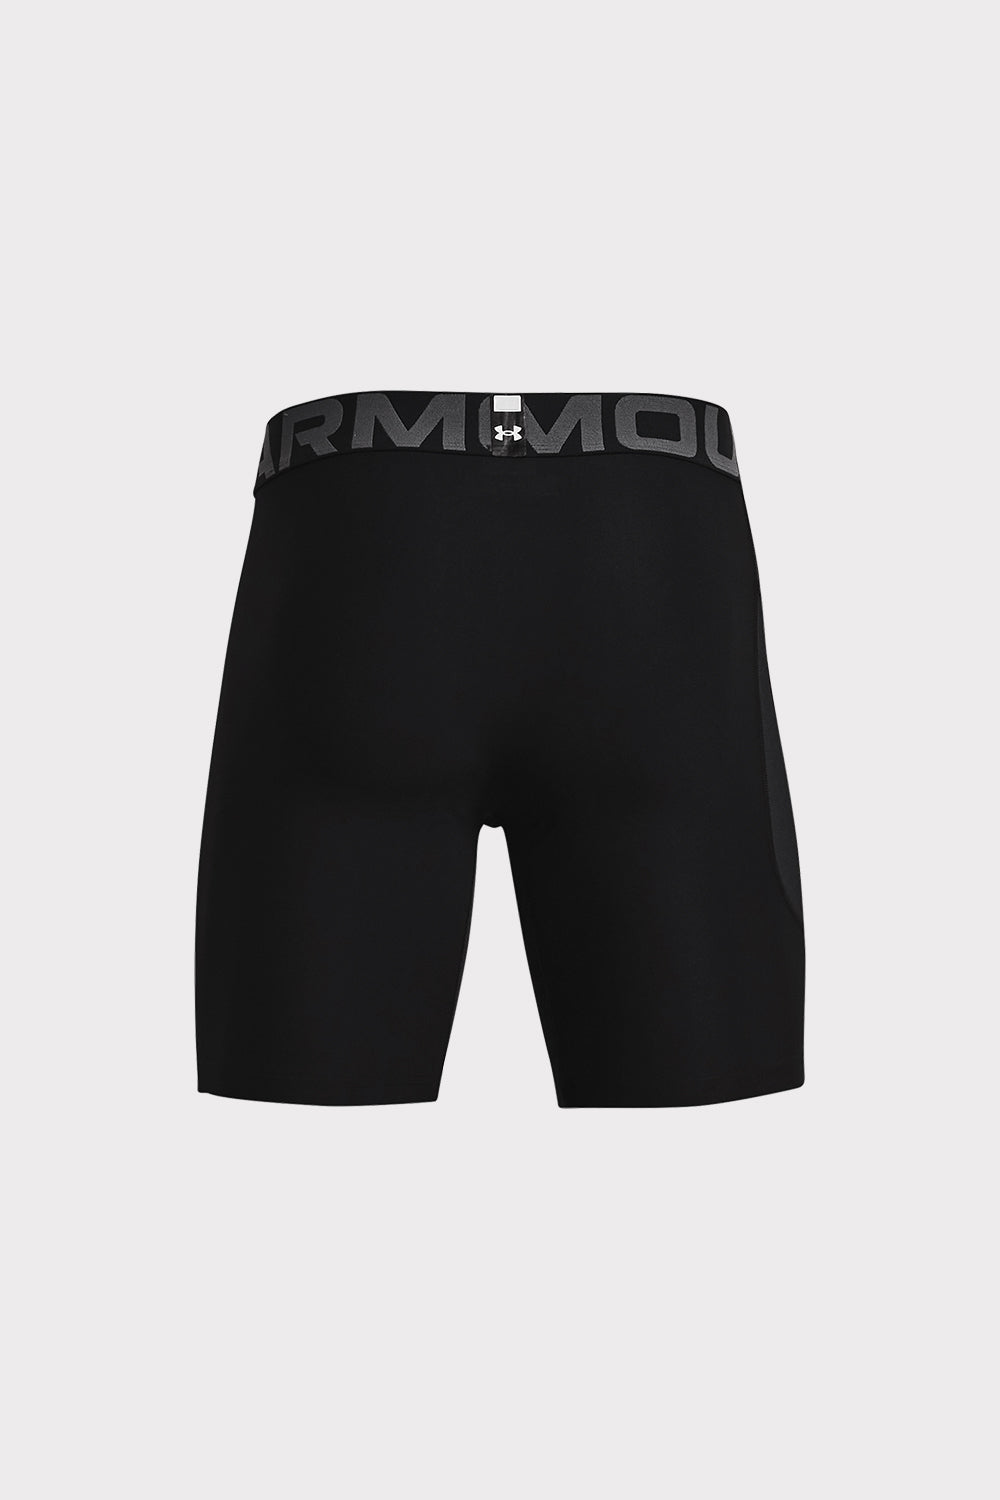 UA HG Armor Compression Shorts - černé